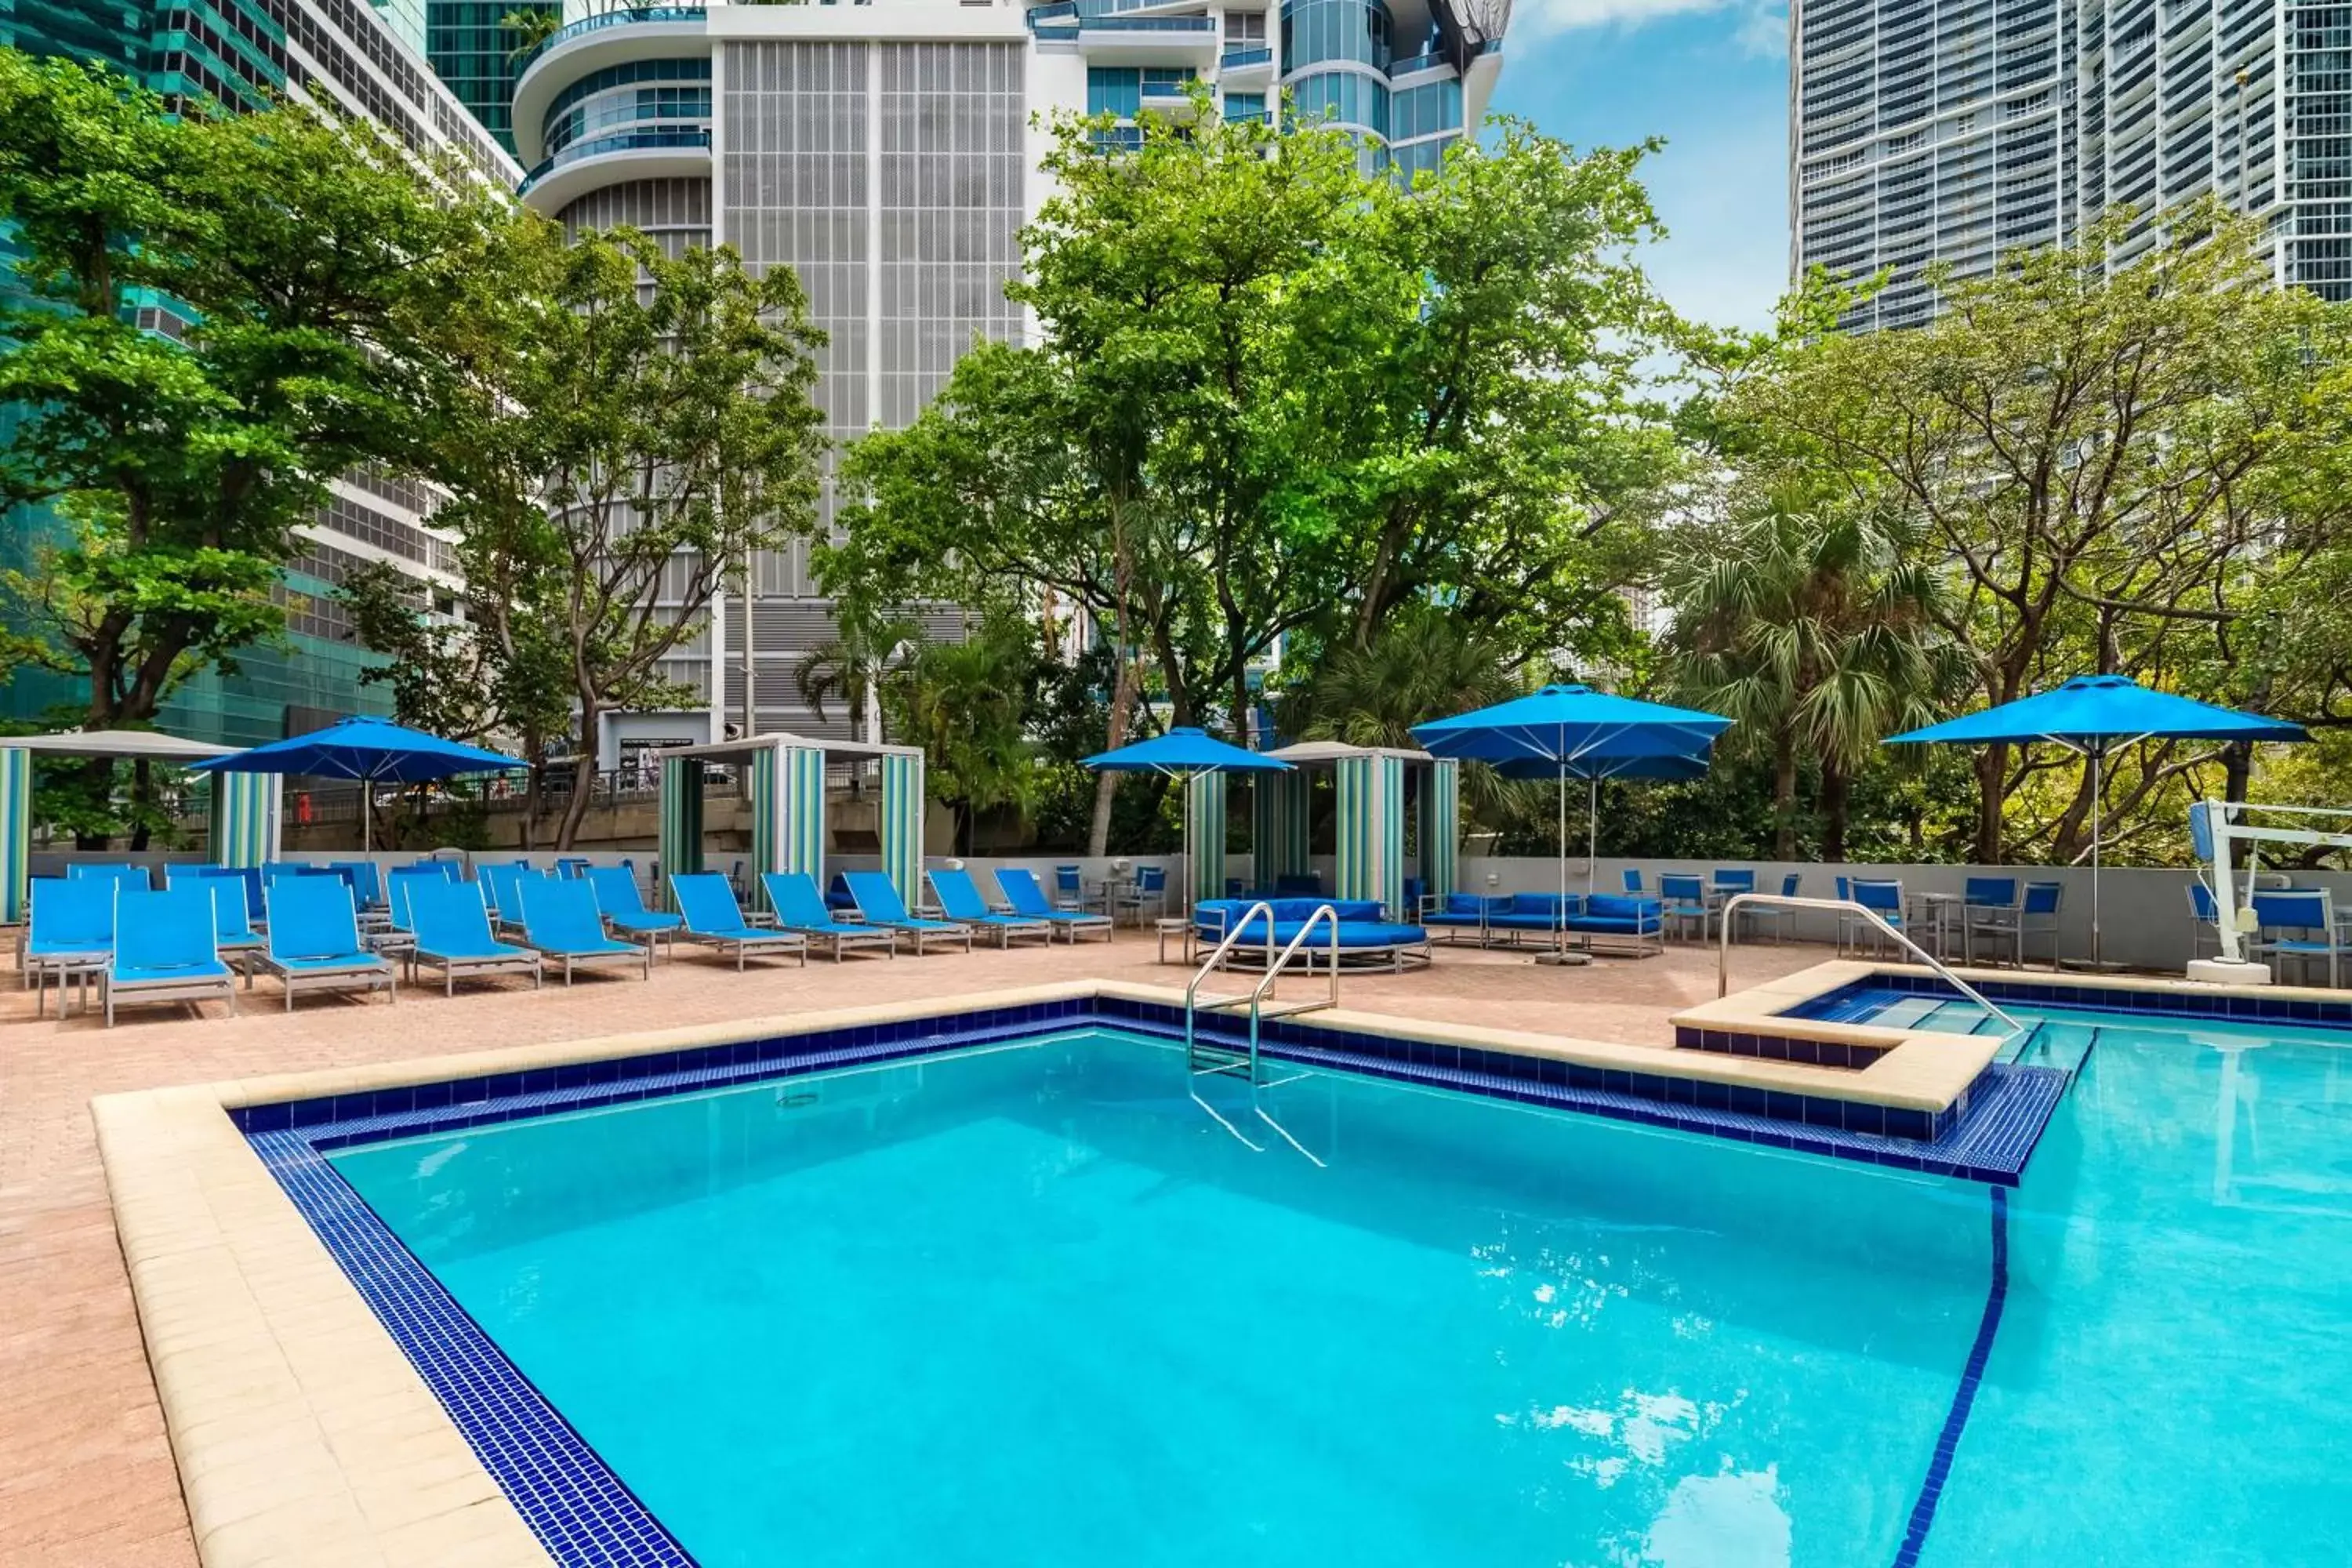 On site, Swimming Pool in Hyatt Regency Miami